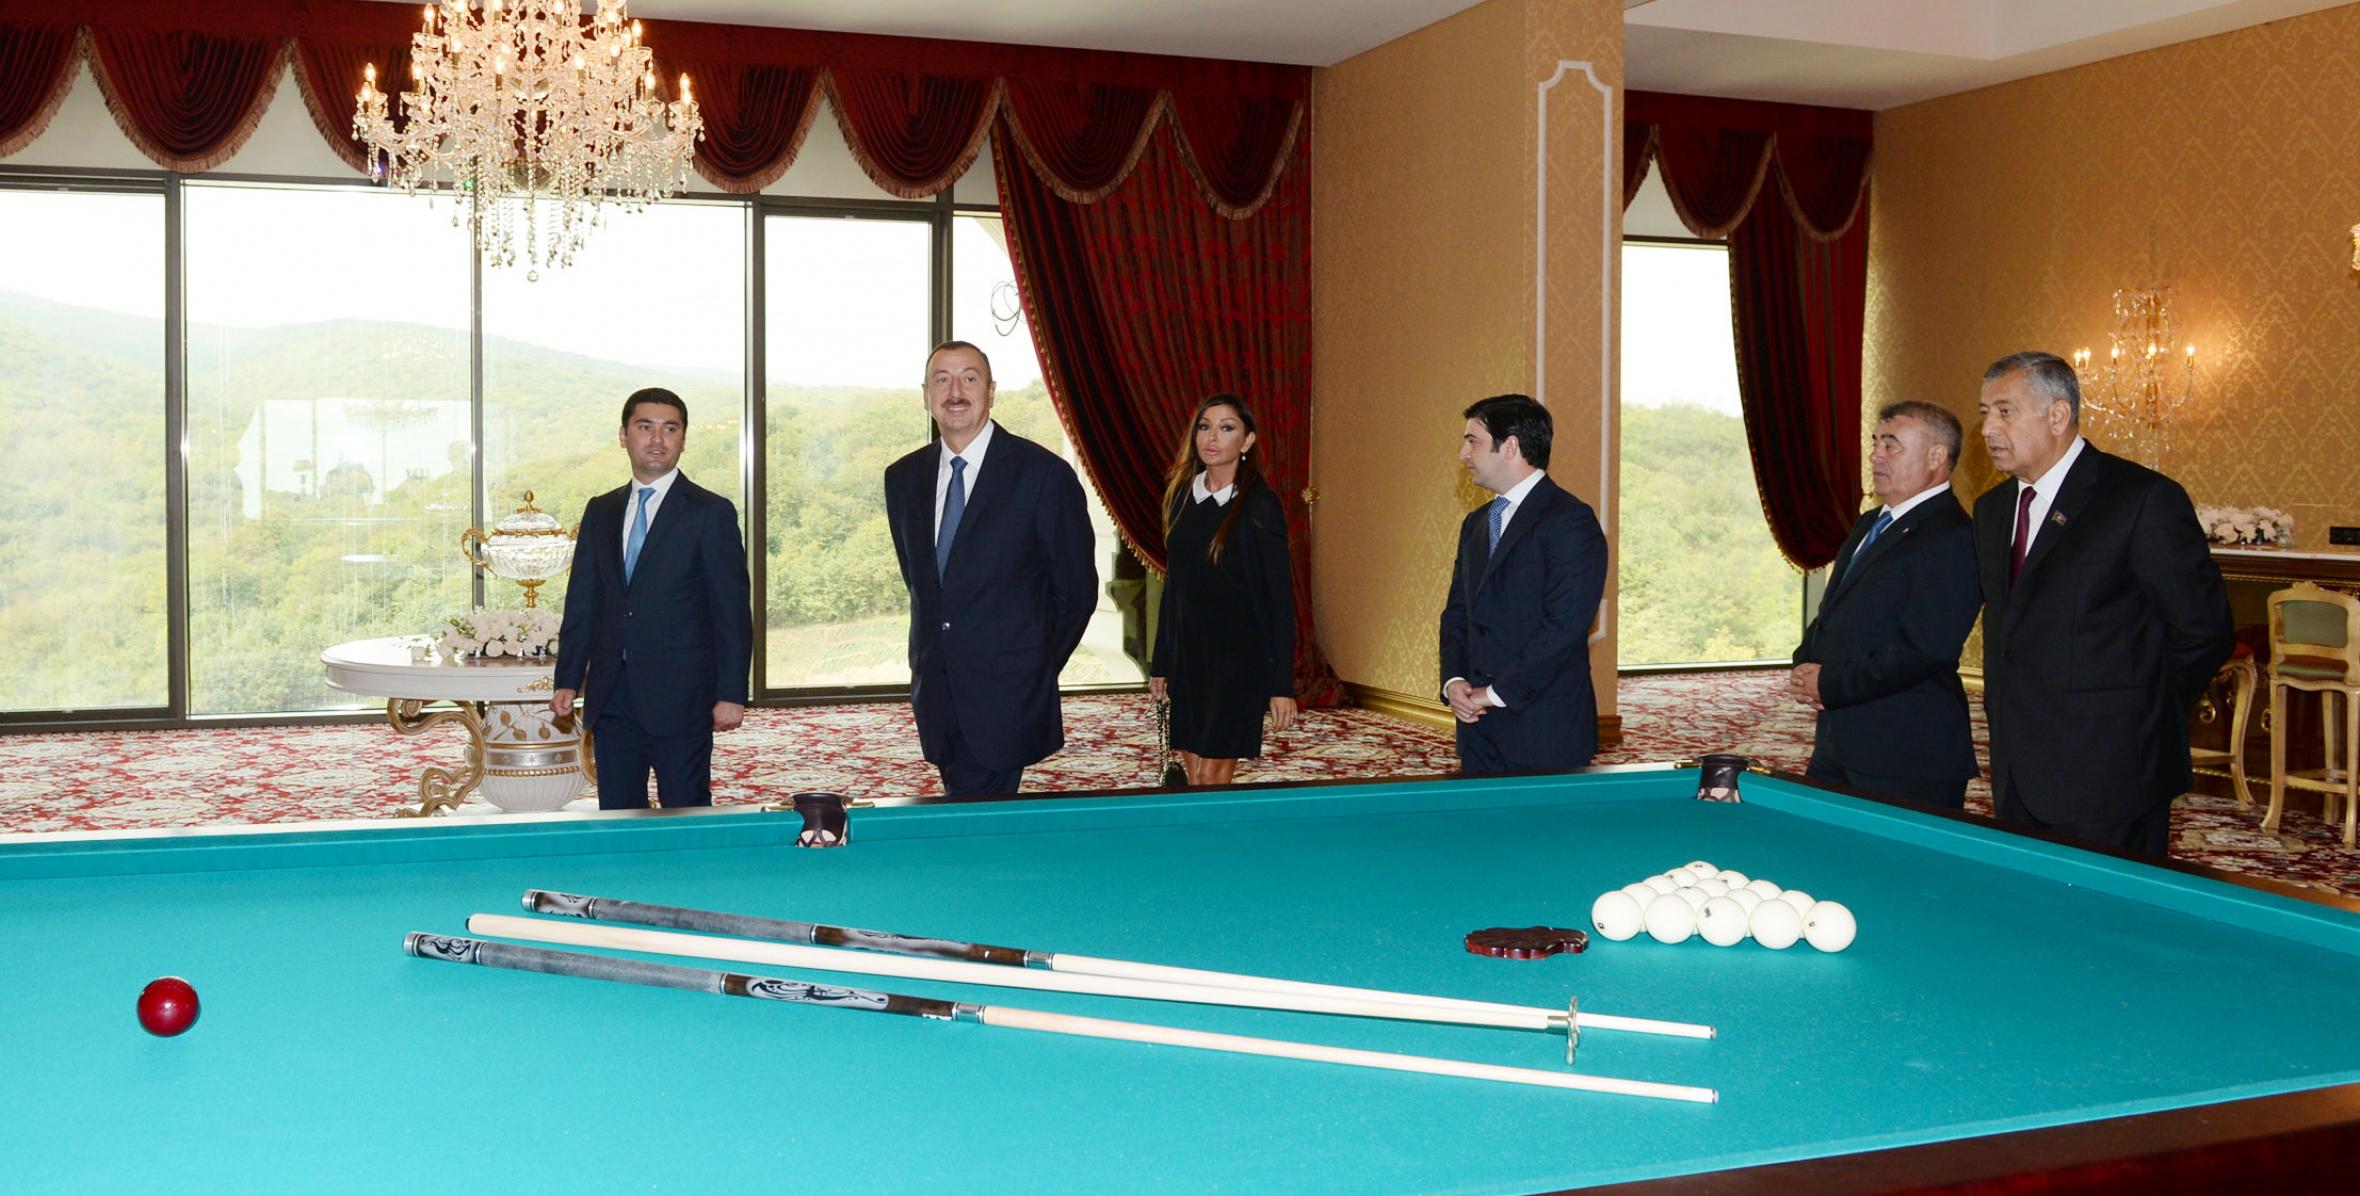 Ilham Aliyev reviewed the five-star “Rixos Guba Azerbaijan” hotel in the Aski-Igrig village